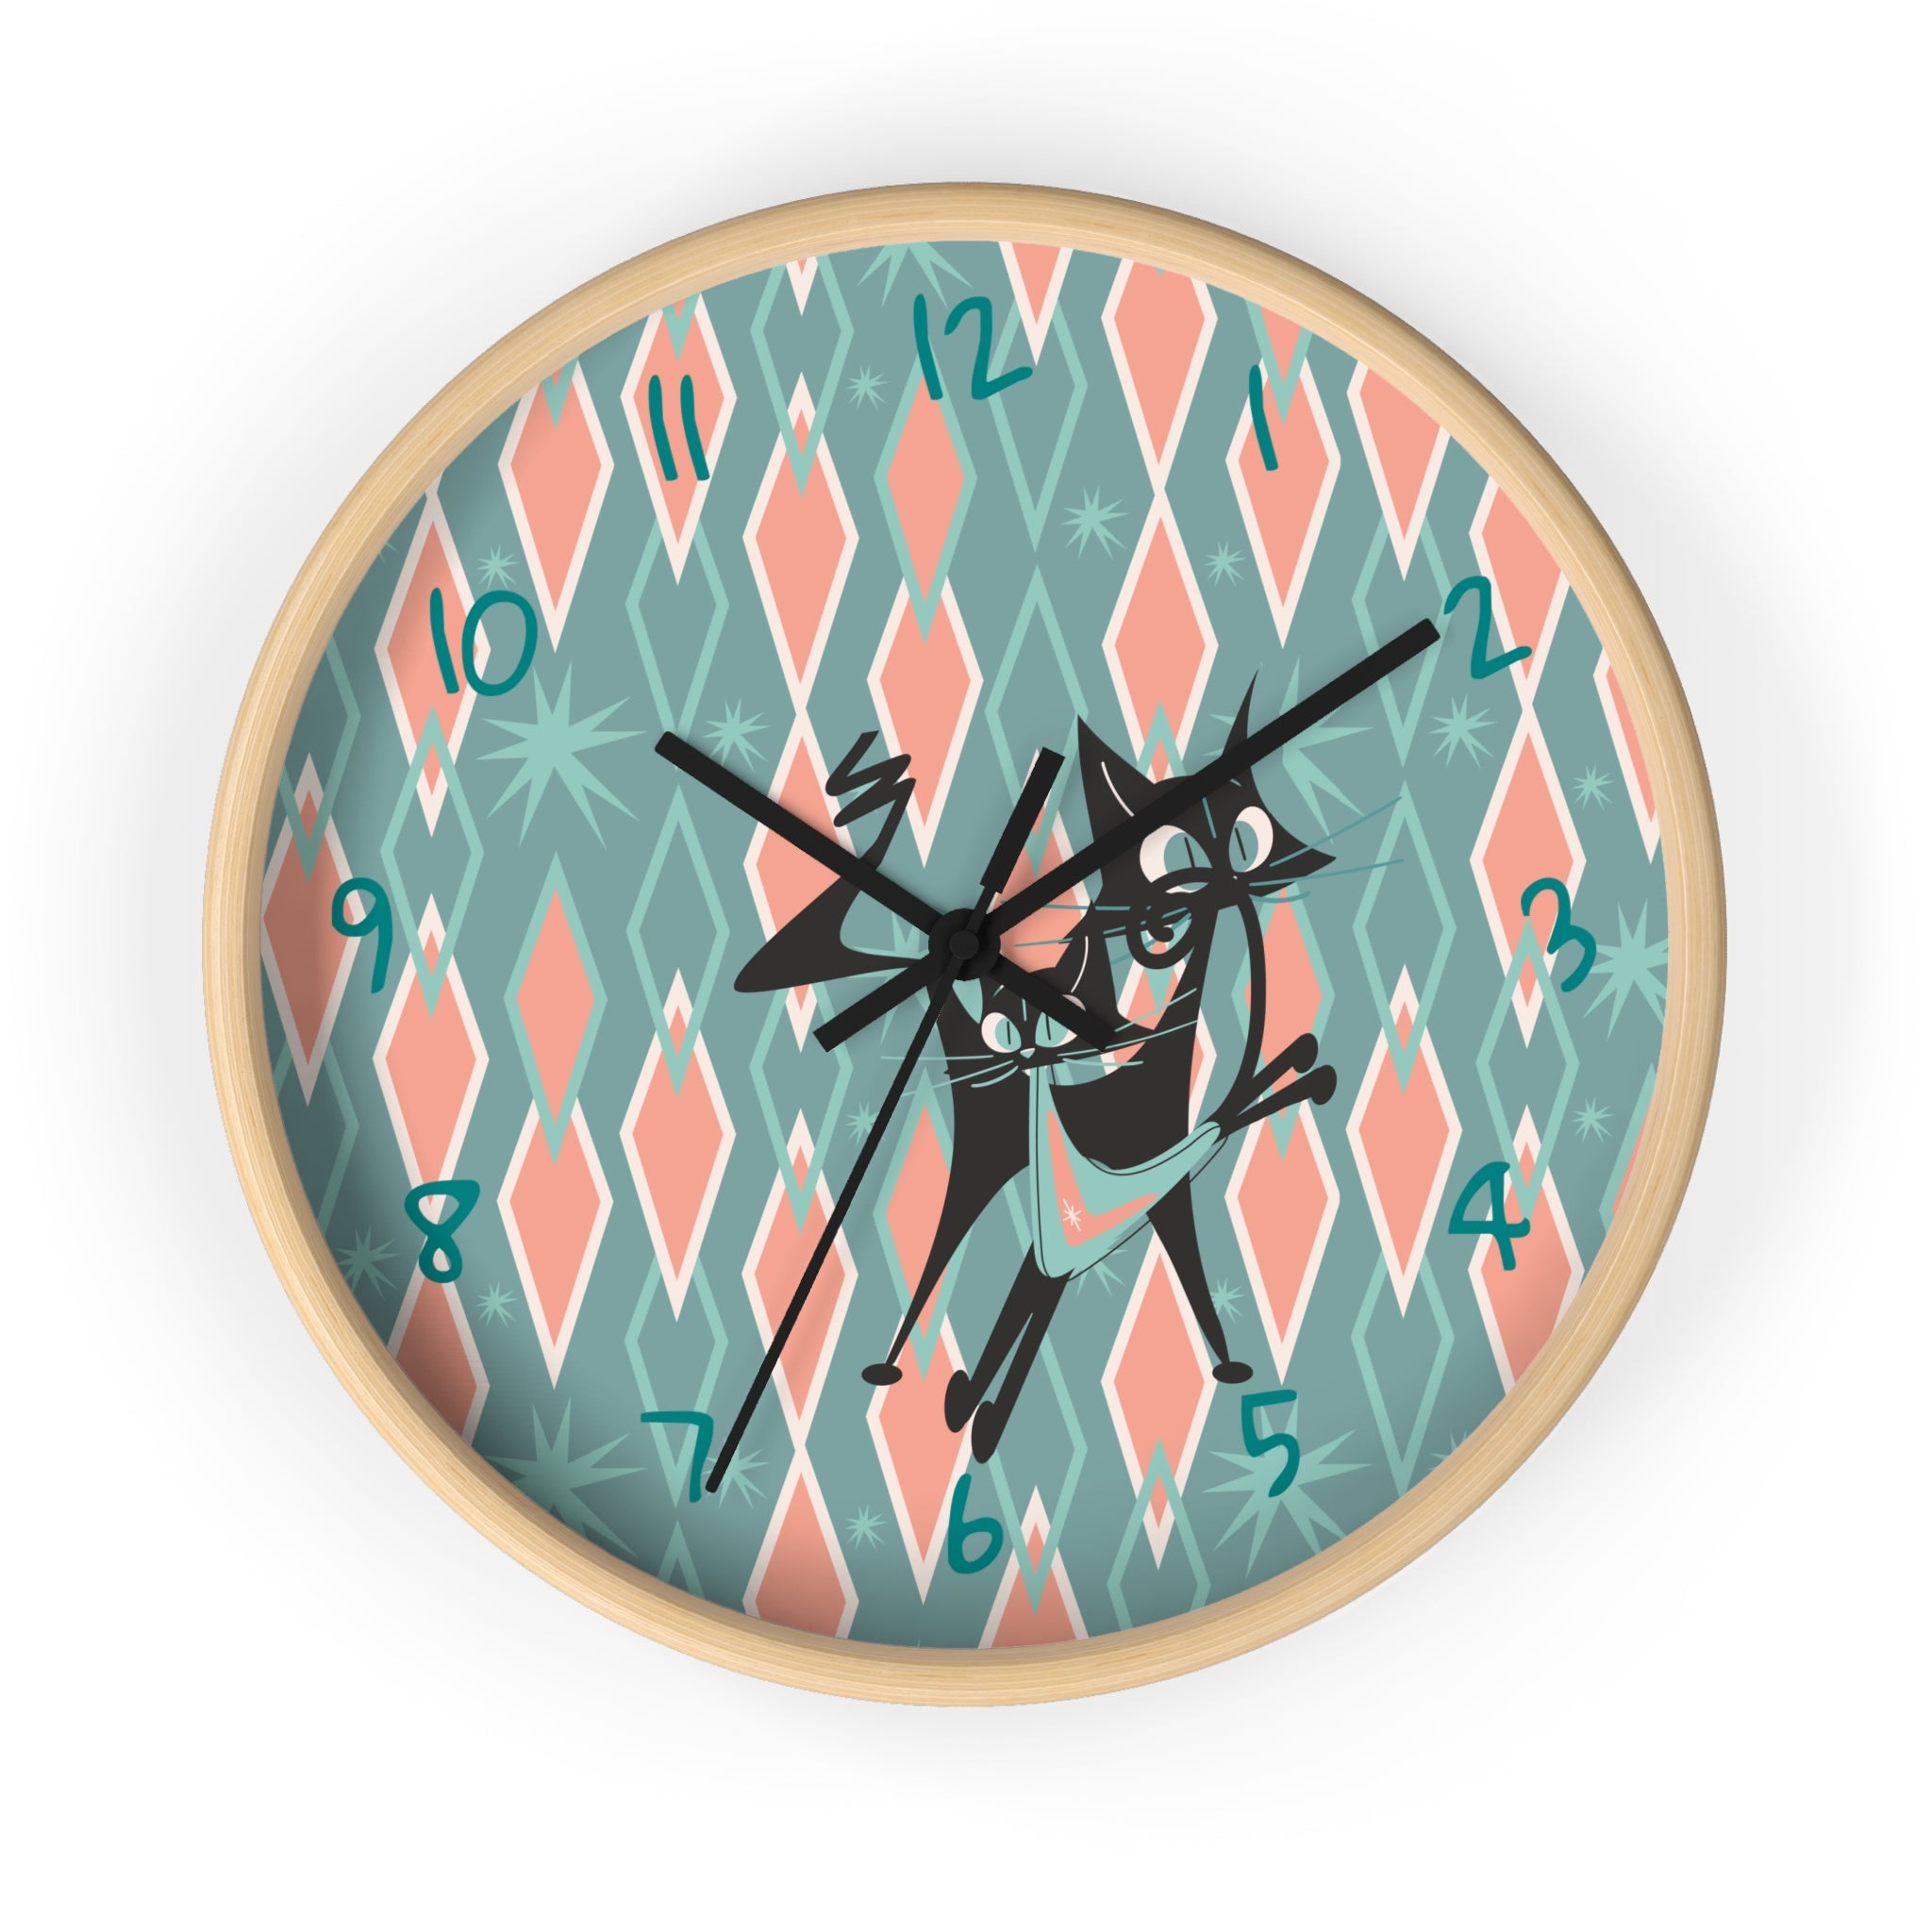 Retro Kitchen Wall Clock For Atomic Cat Black Cat Lovers, Mid Century Modern Designed, Teal, Pink Harlequin Diamond Designed MCM Clock